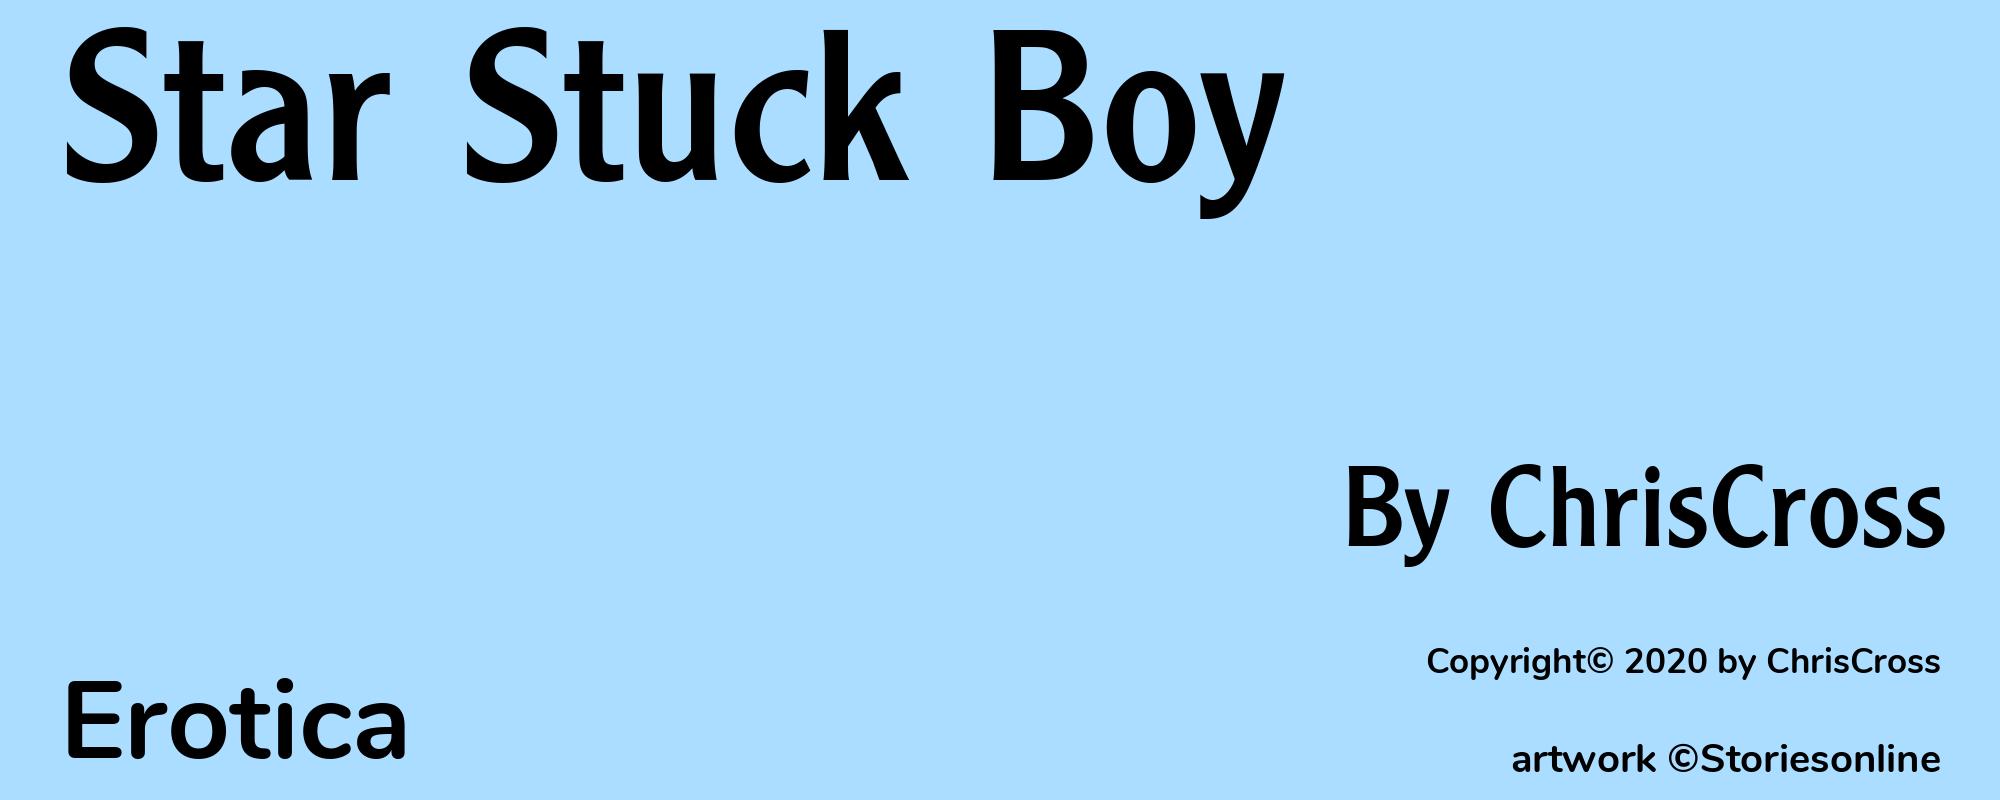 Star Stuck Boy - Cover